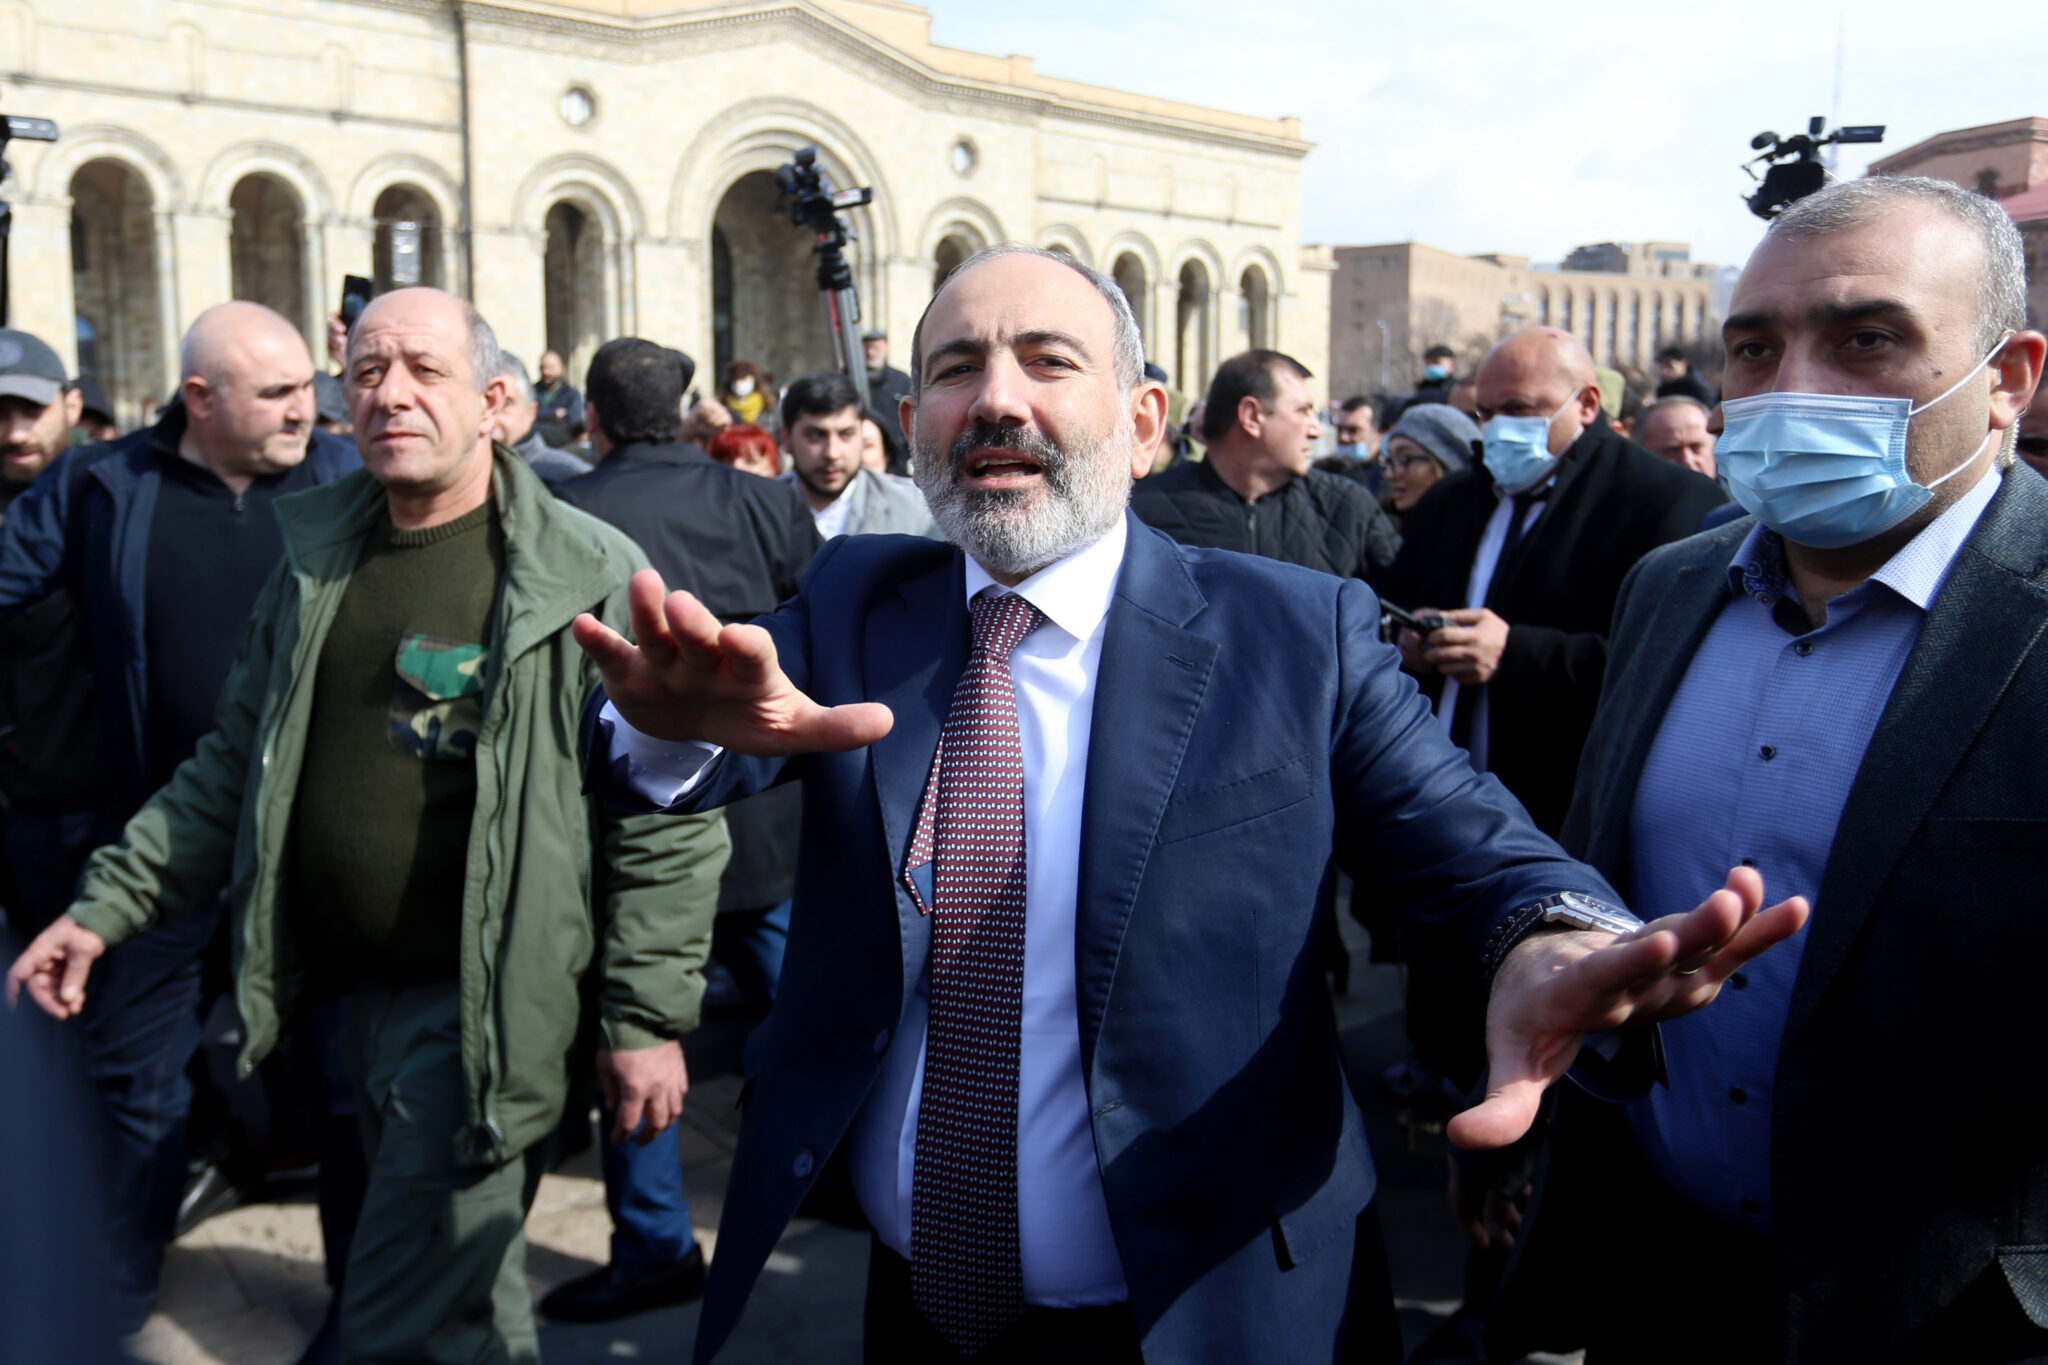 Никол Пашинян во время митинга своих сторонников на площади Республики в центре Еревана. Фото Stepan Poghosyan / TASS / Scanpix / Leta